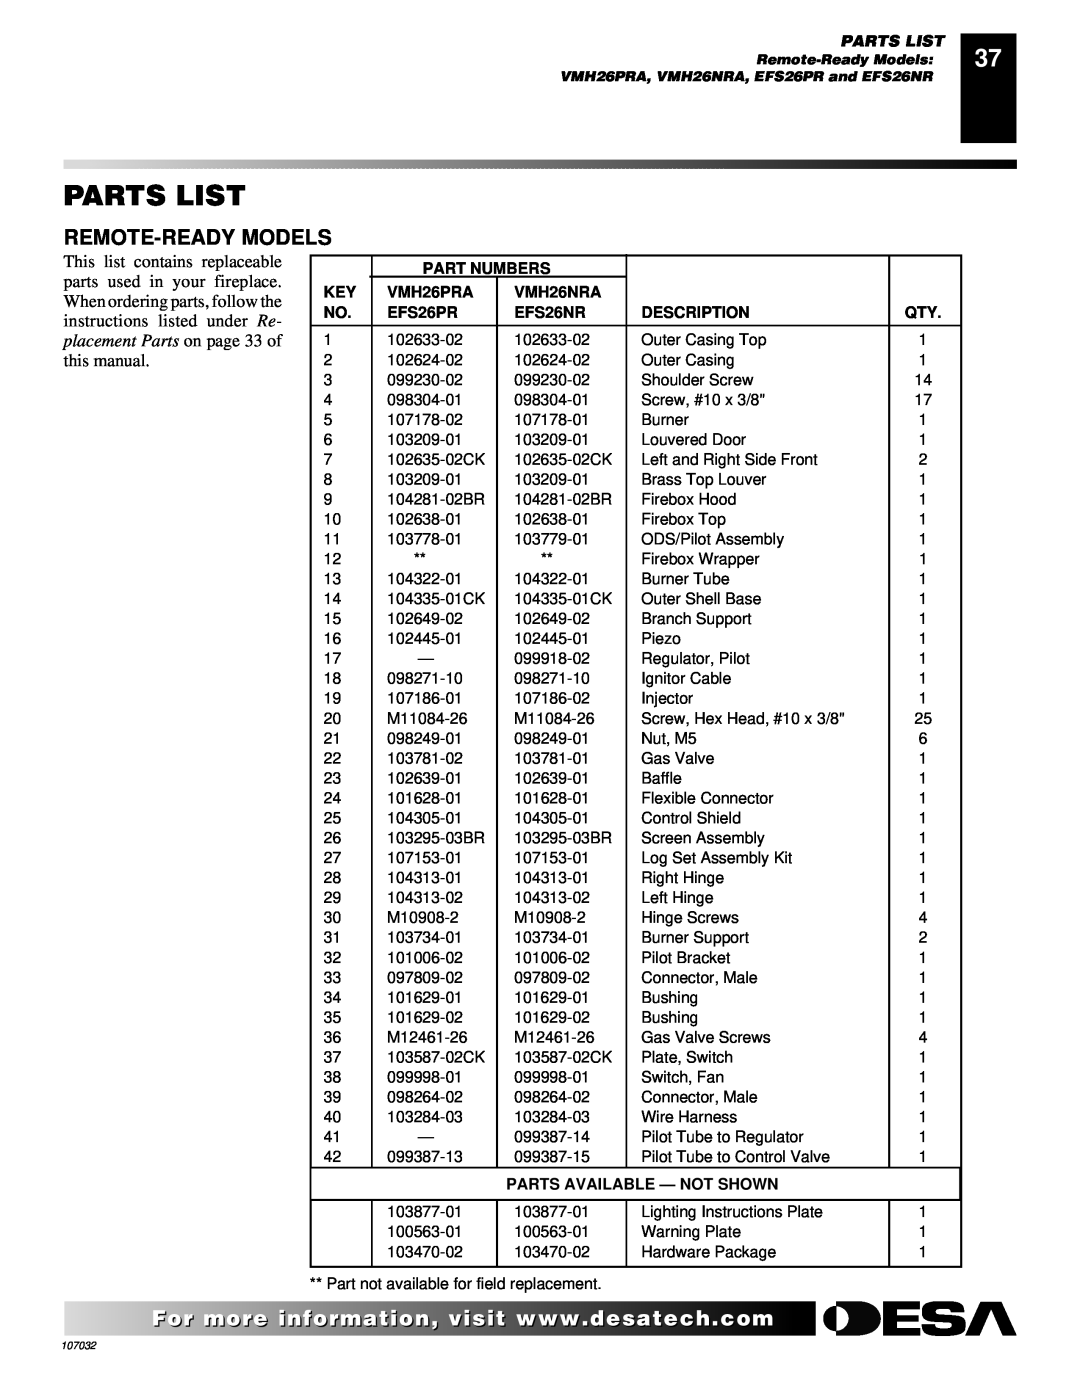 Desa VMH10TPB Remote-Readymodels, Parts List, Part Numbers, VMH26PRA, VMH26NRA, EFS26PR, EFS26NR, Description 